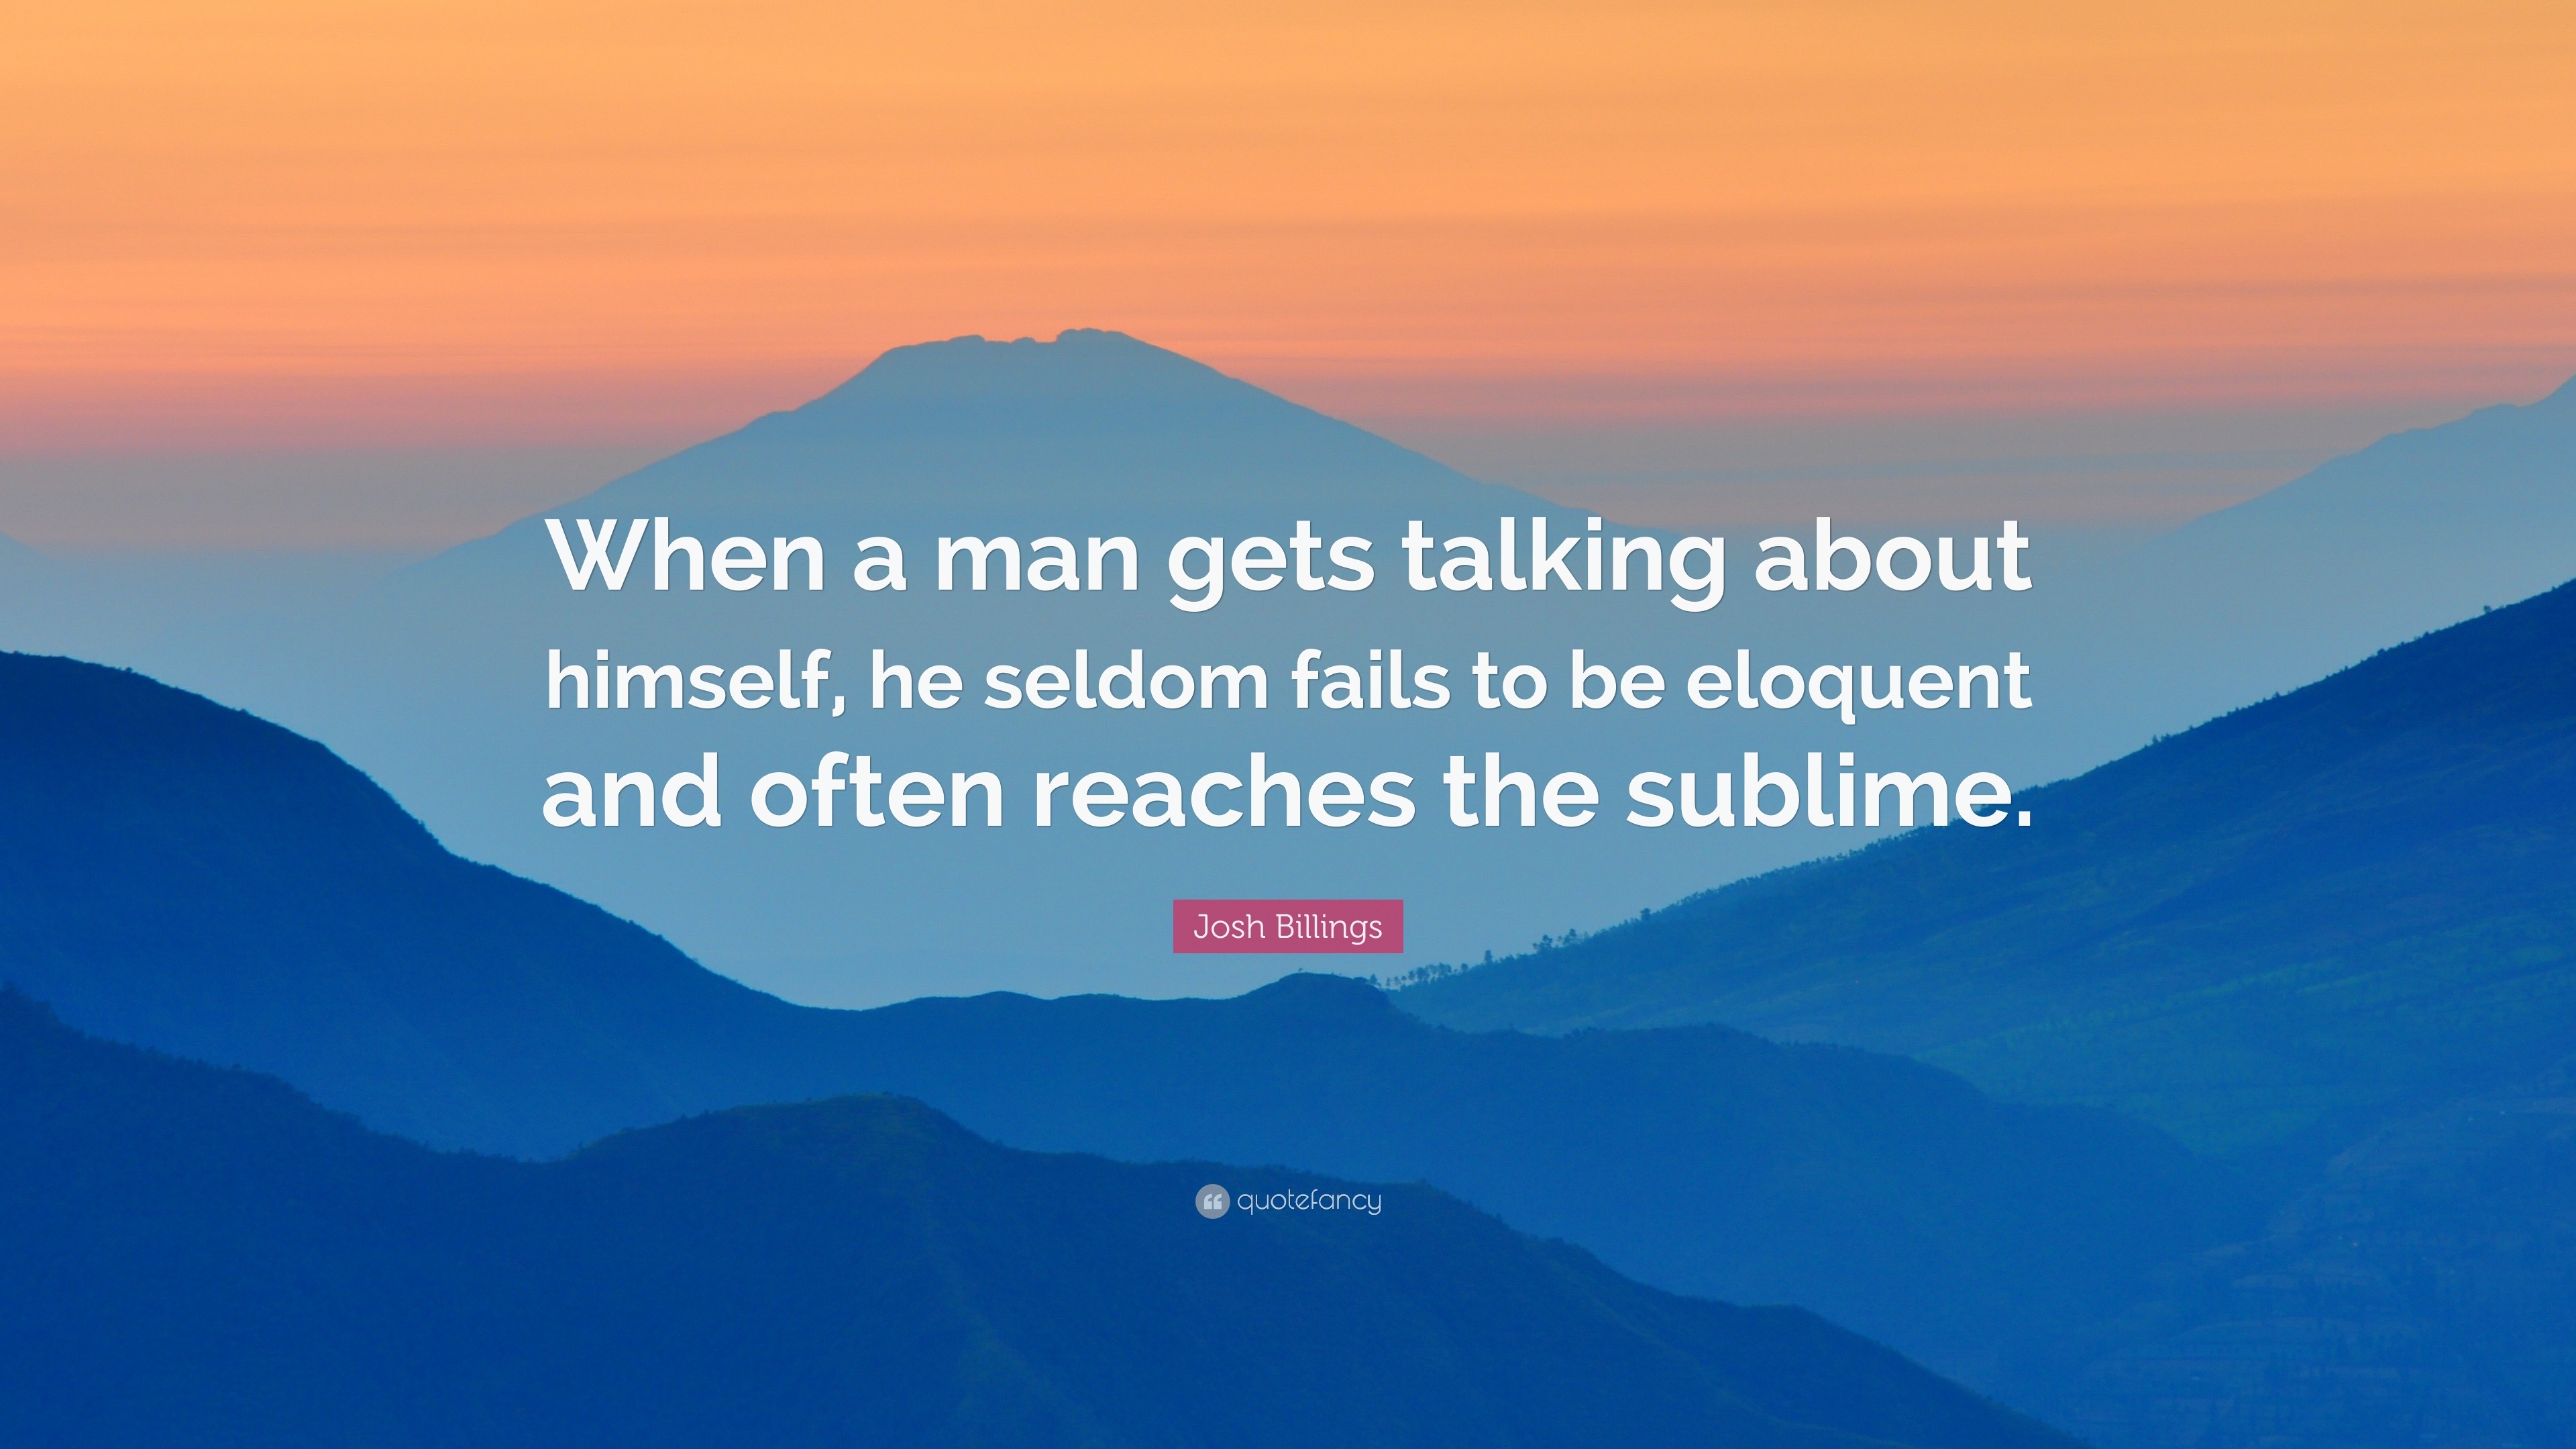 Josh Billings Quote: “When a man gets talking about himself, he seldom ...